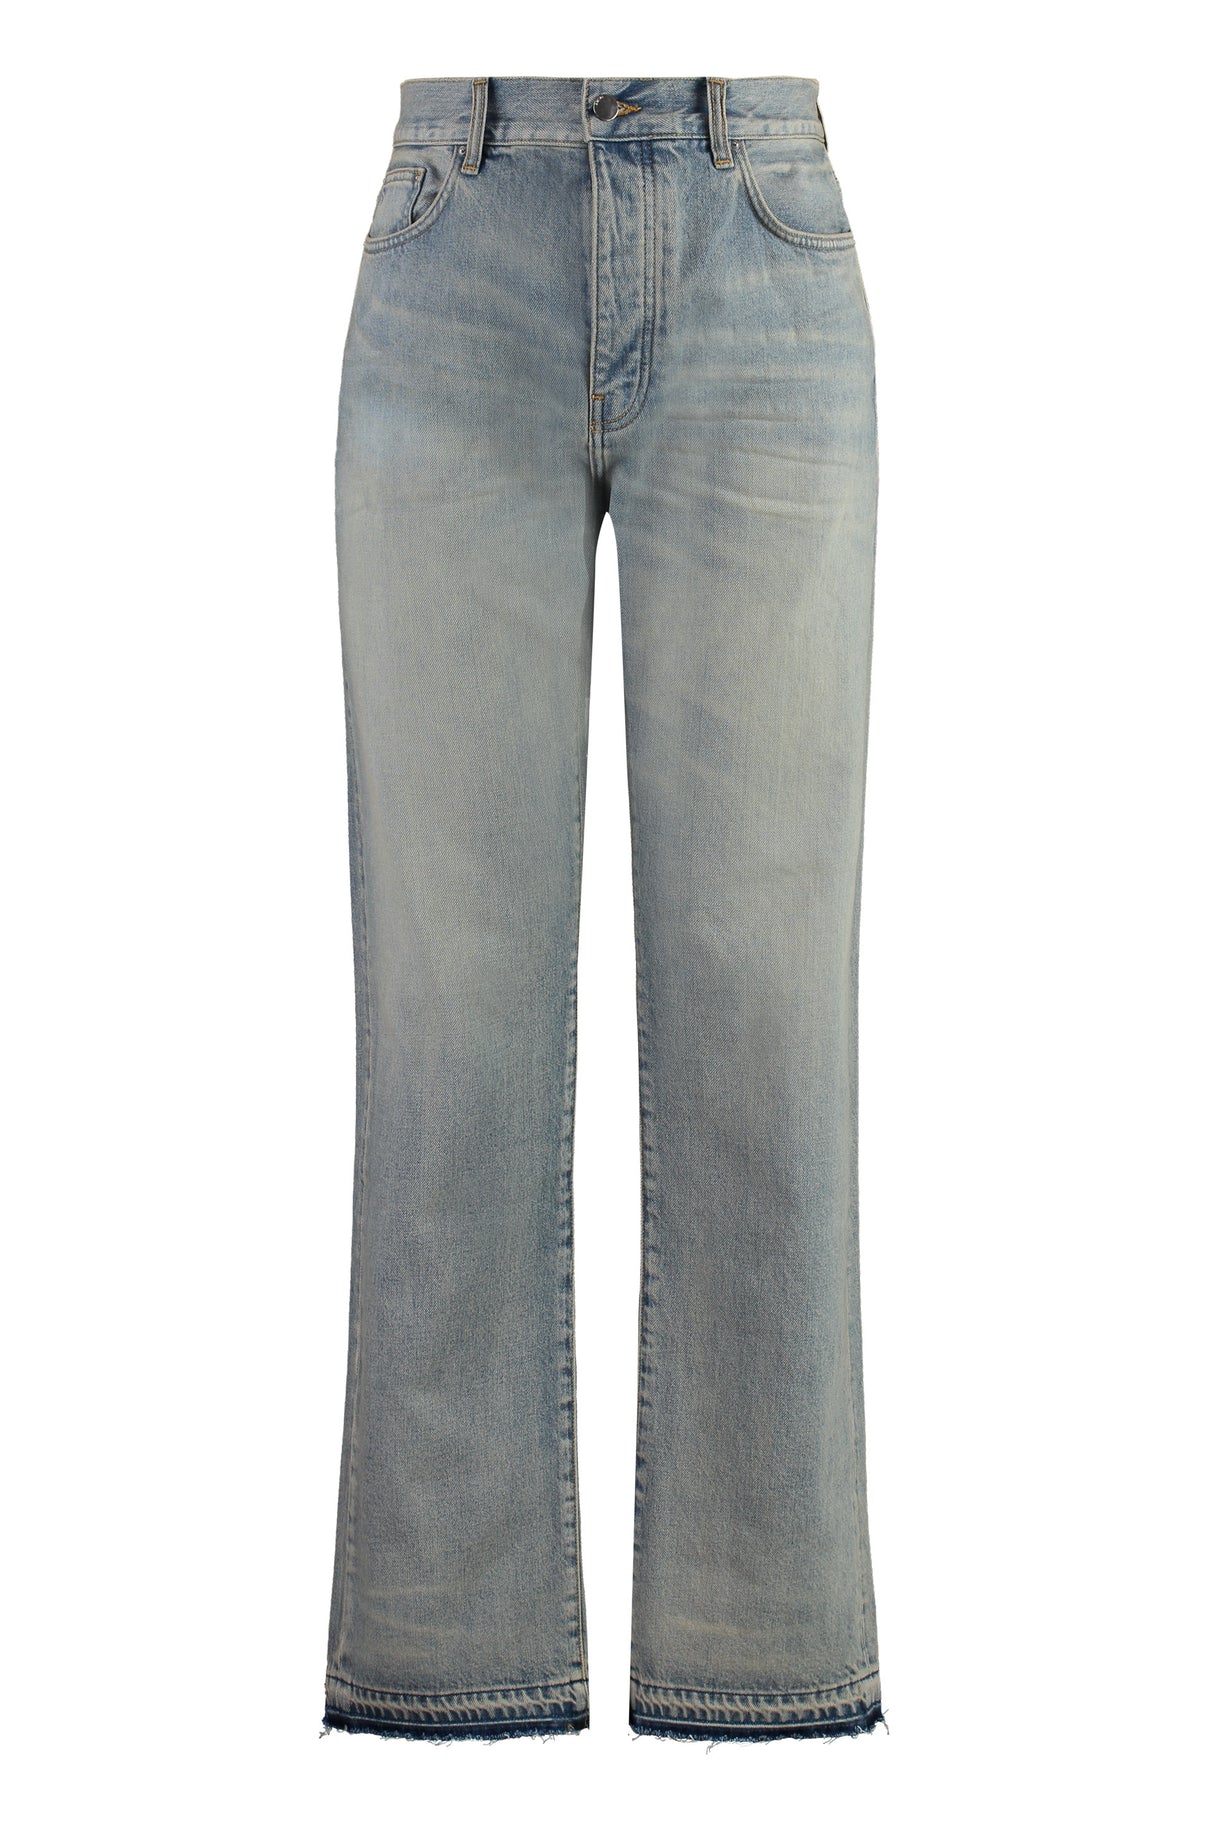 AMIRI Men's Vintage 5-Pocket Straight-Leg Jeans